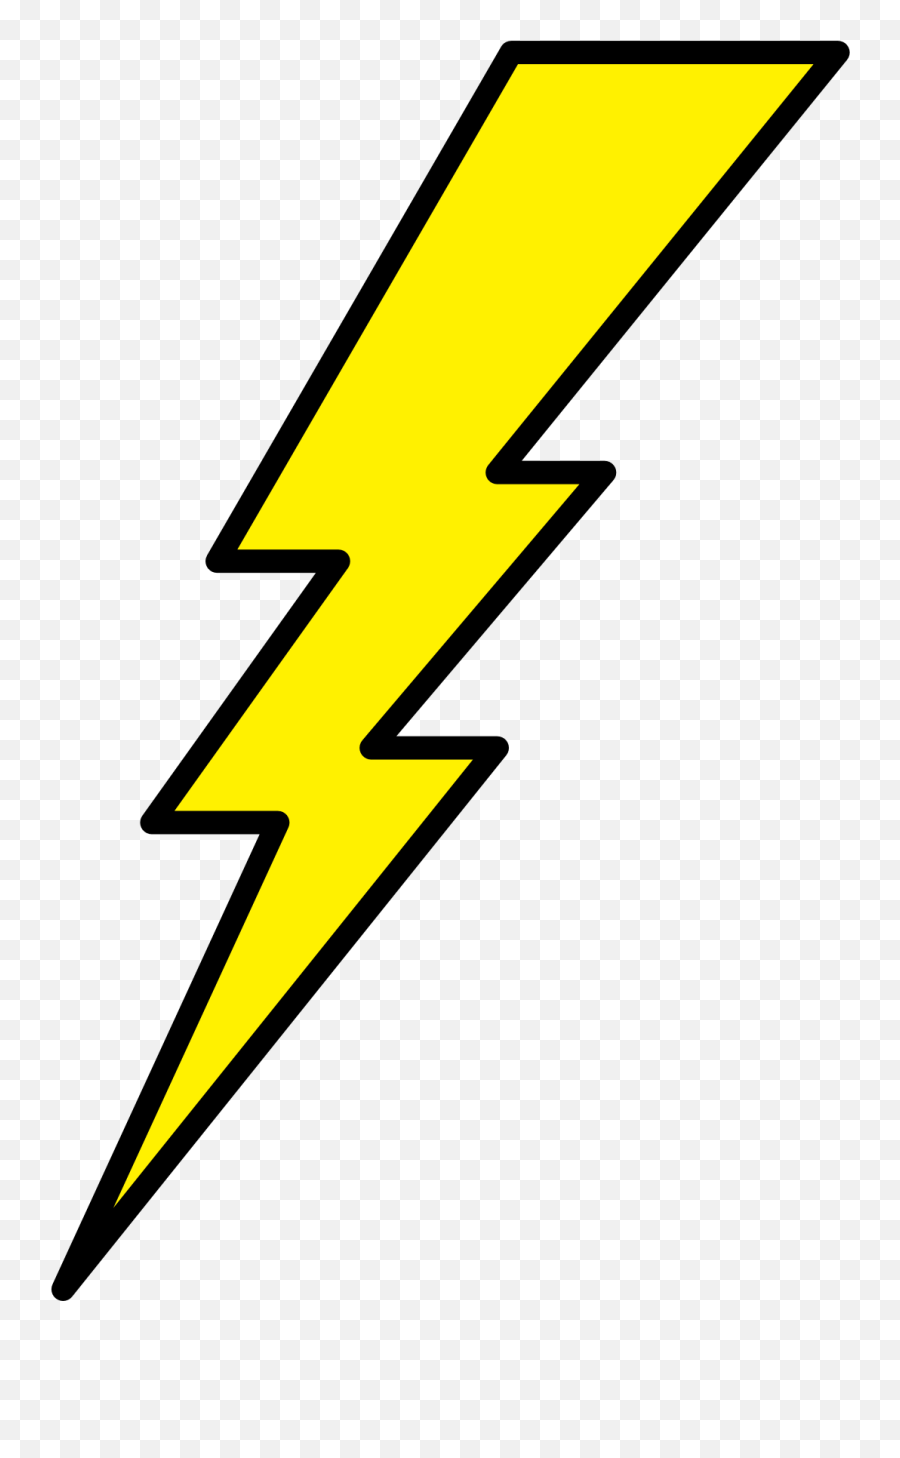 Fileharry Potter Lightningsvg - Wikimedia Commons Harry Potter Lightning Bolt Png,Harry Potter Logo Transparent